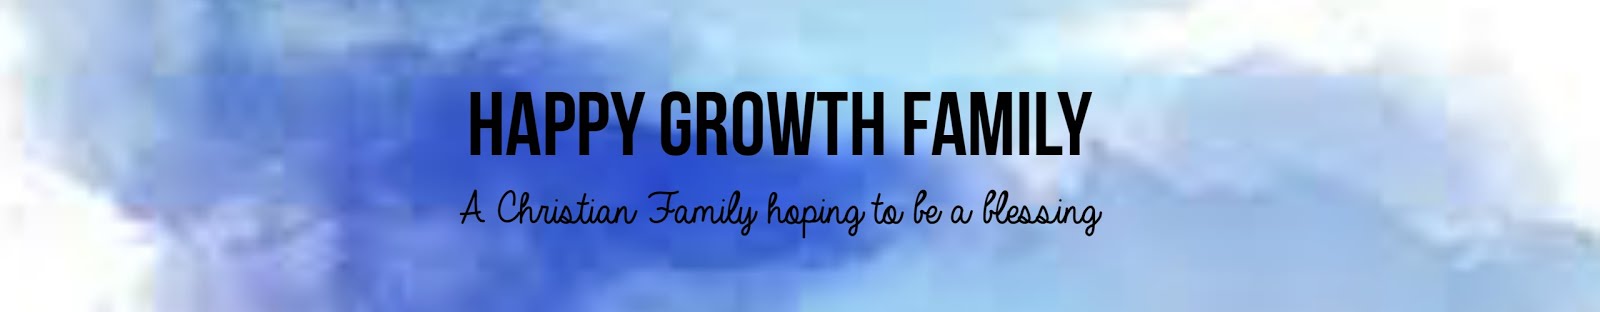 Happy Growth Family